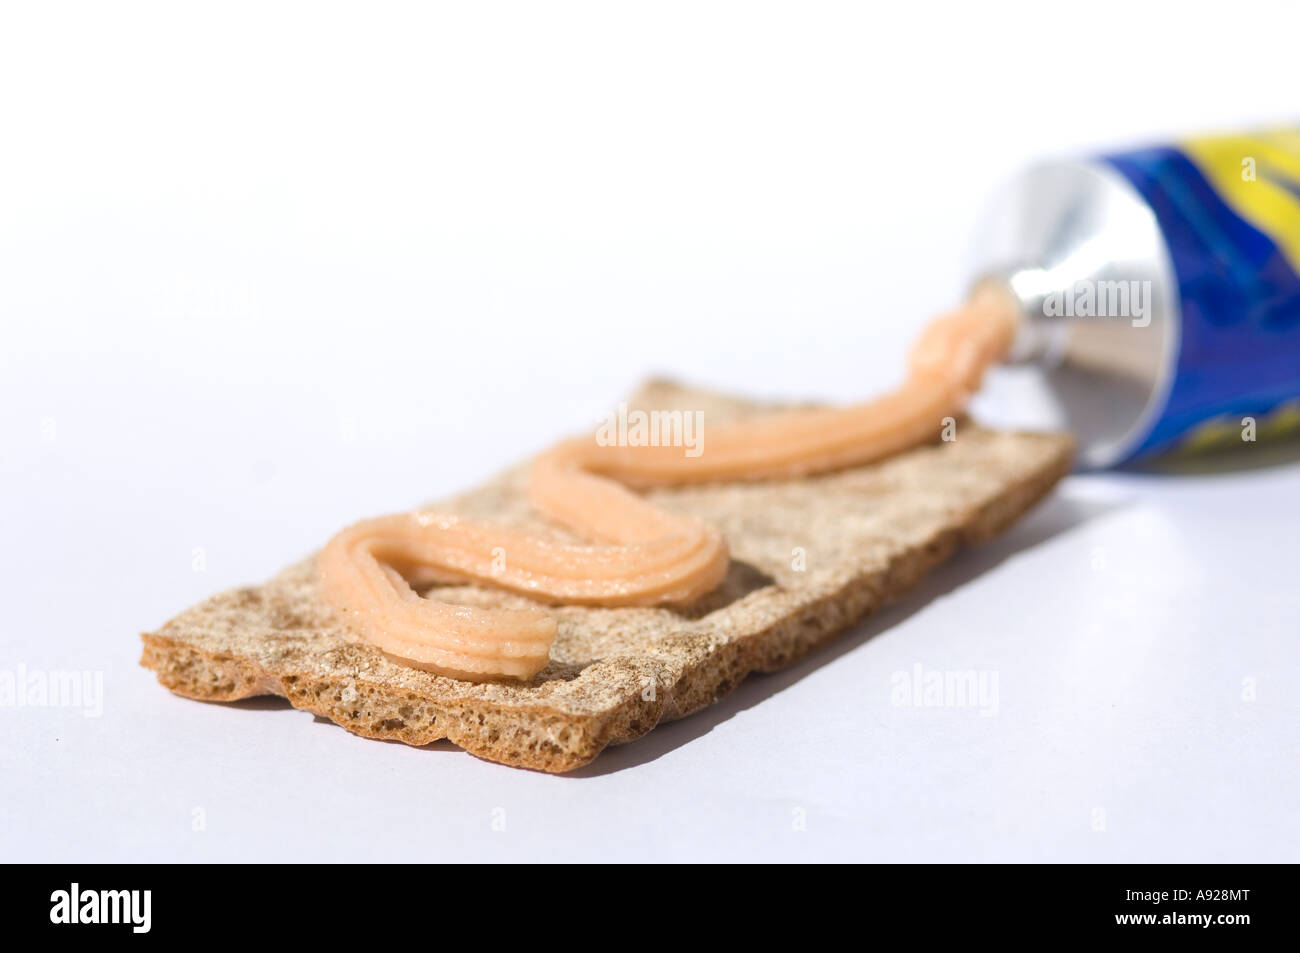 Tube of swedish caviar and crispbread Stock Photo - Alamy